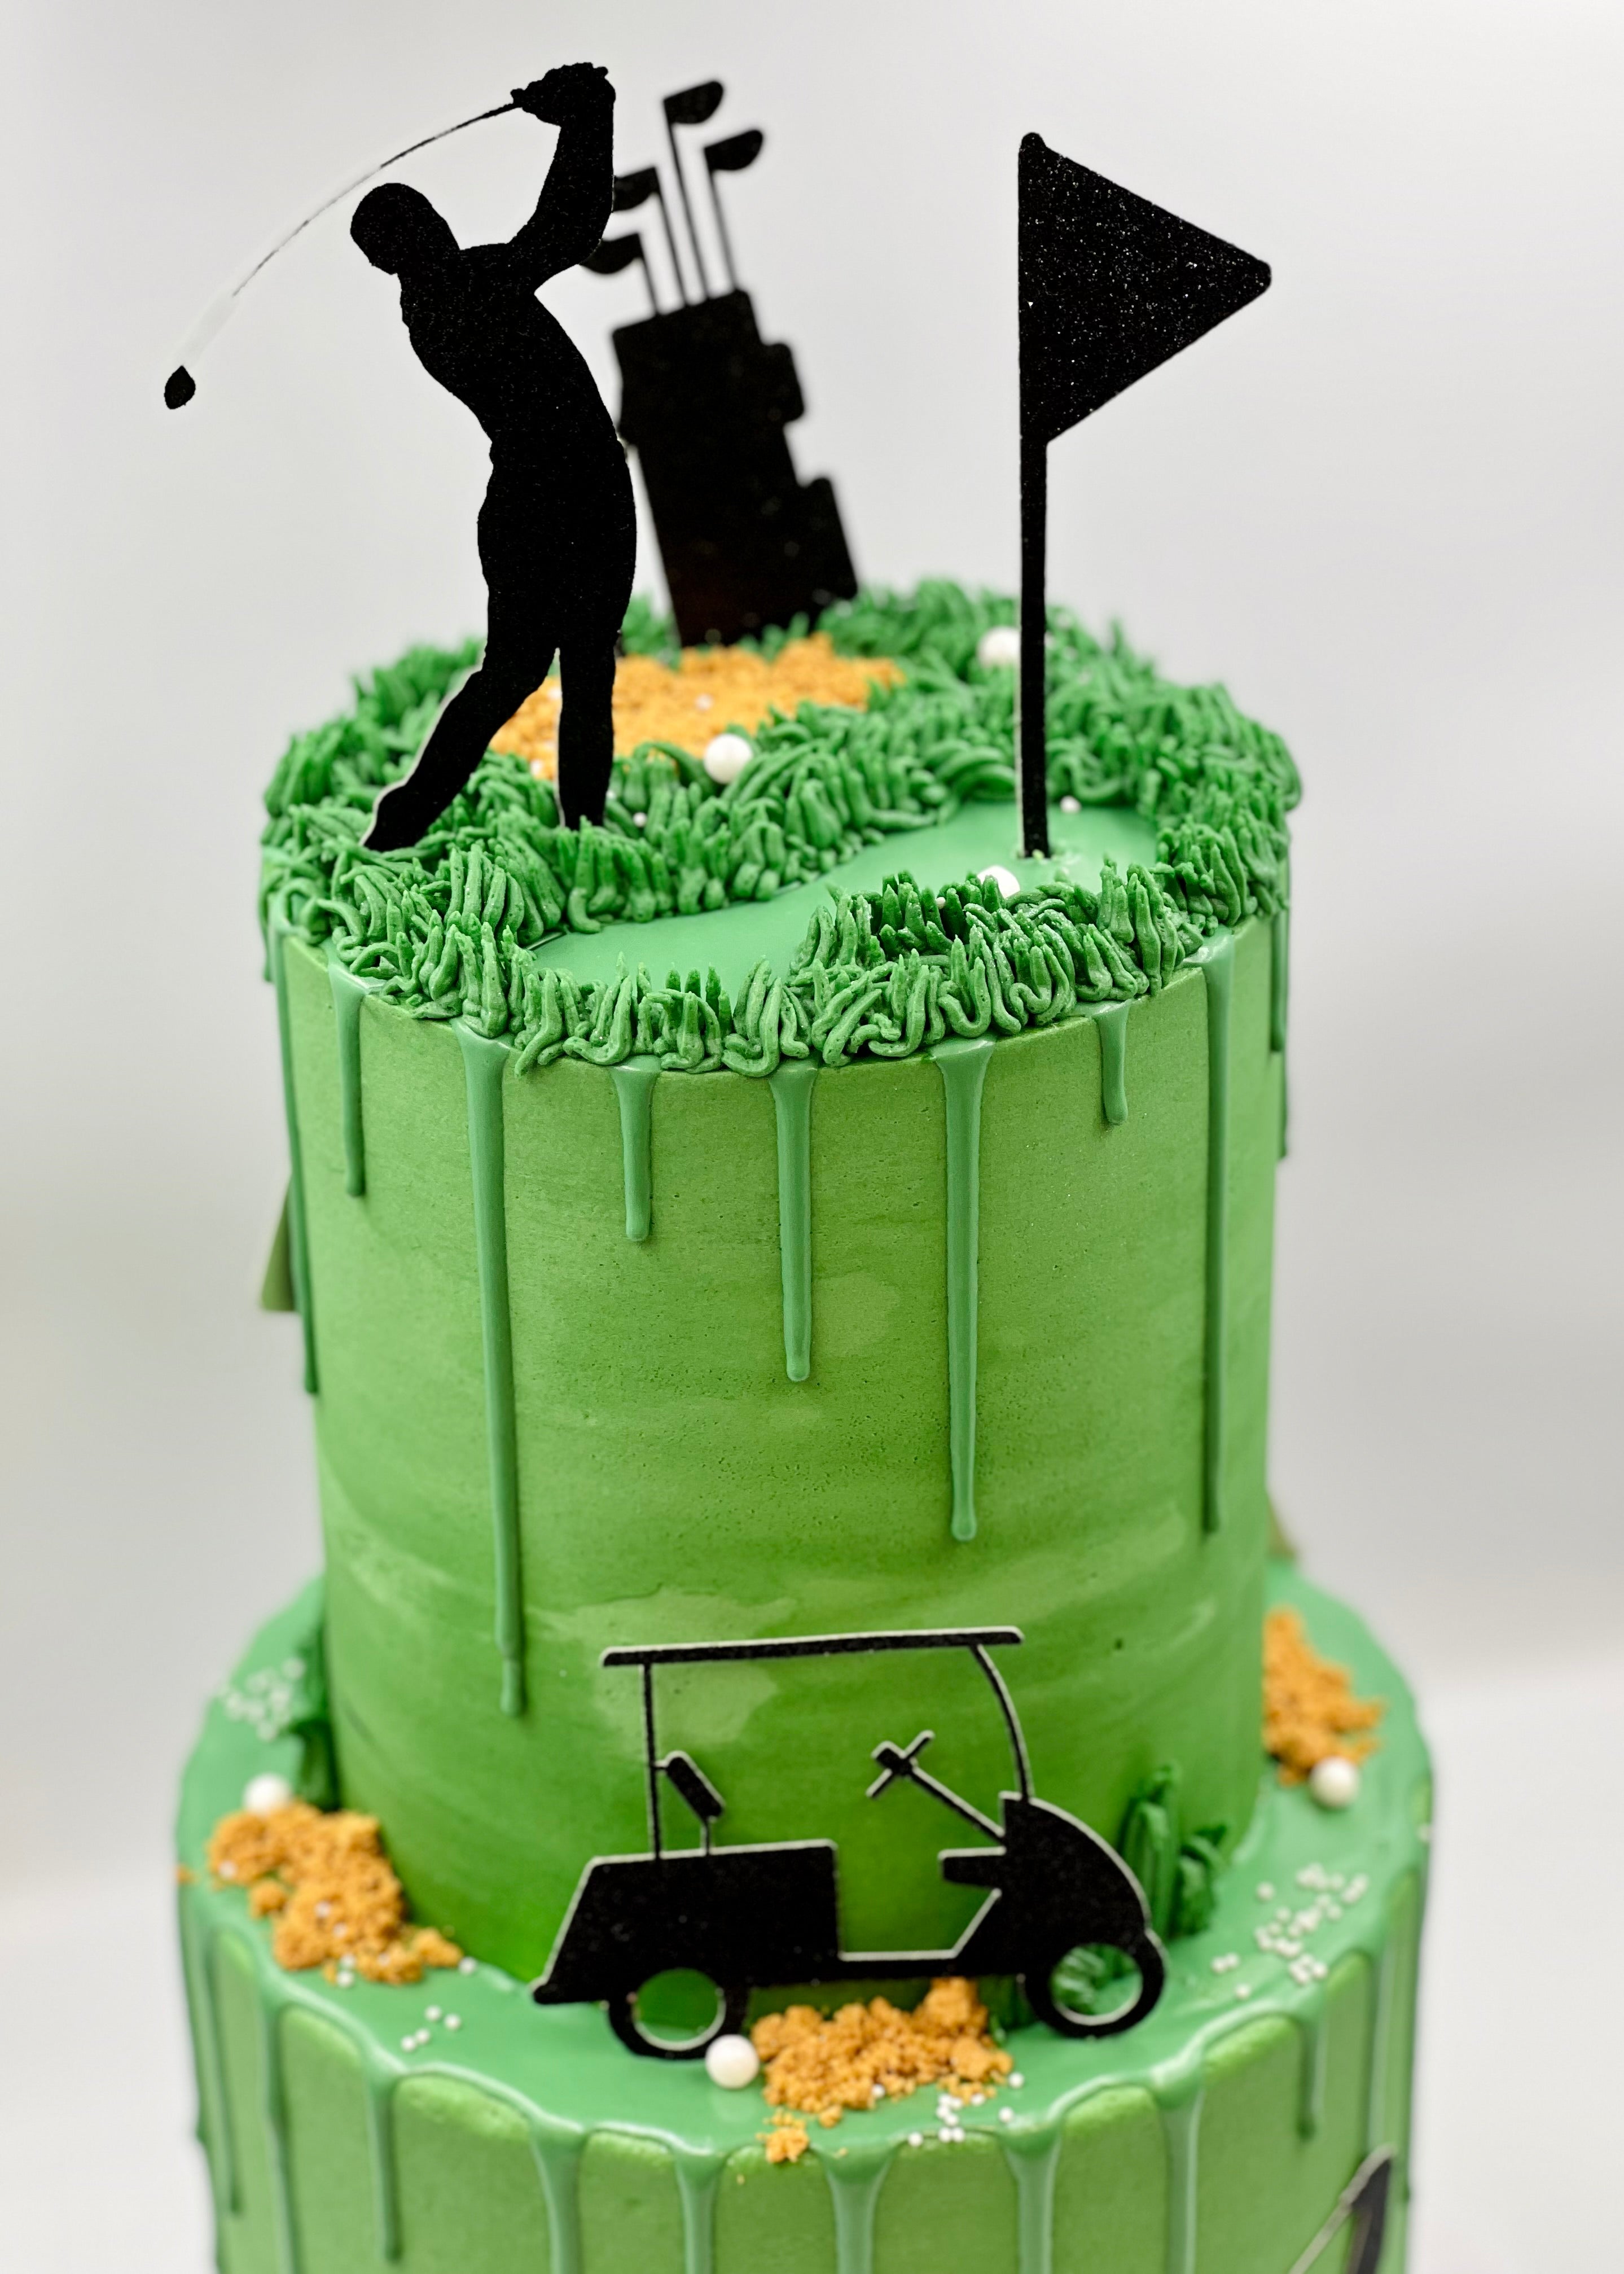 30+ Creative Photo of Golf Birthday Cakes - davemelillo.com | Golf birthday  cakes, Golf themed cakes, Cool birthday cakes